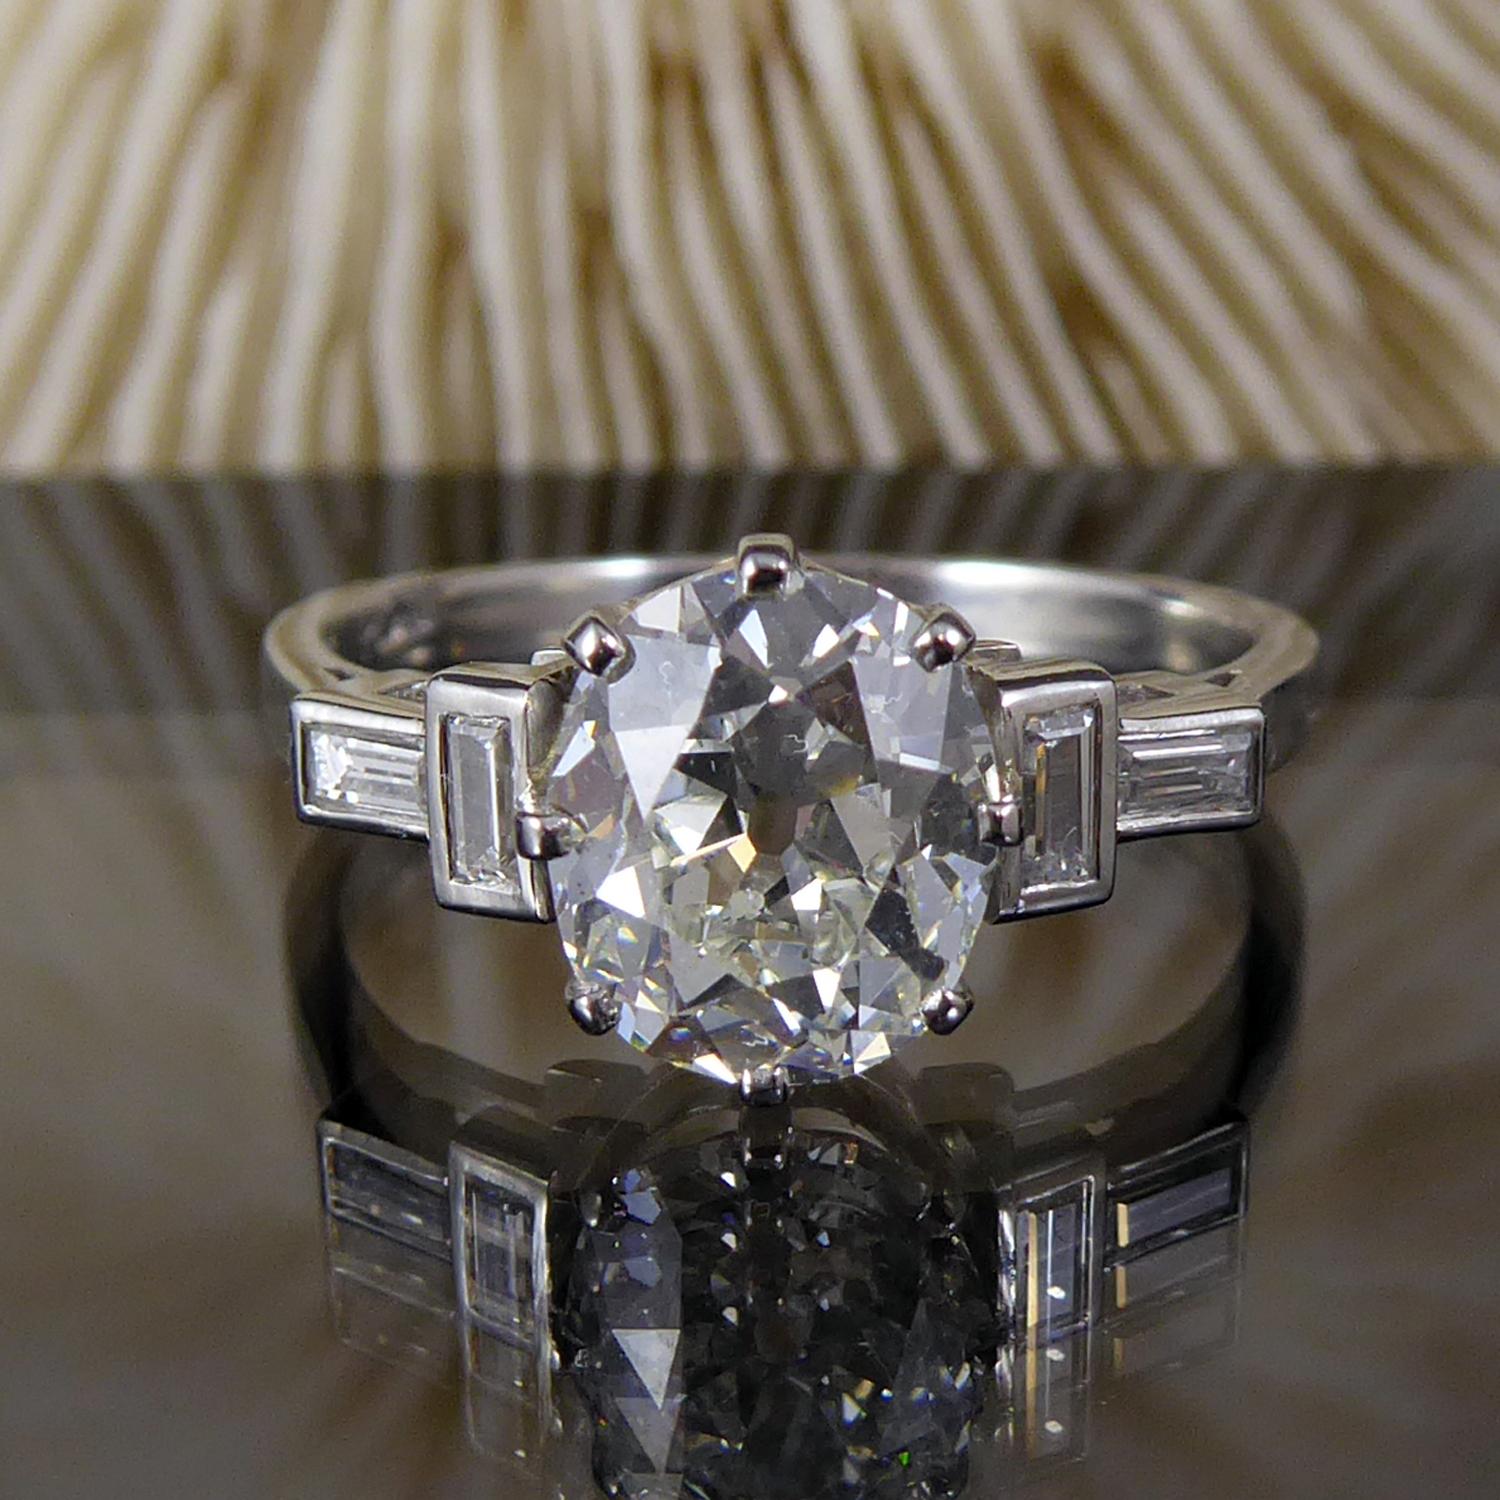 Women's Art Deco 1.61 Carat Old European Cut Diamond Solitaire Ring, Platinum Band